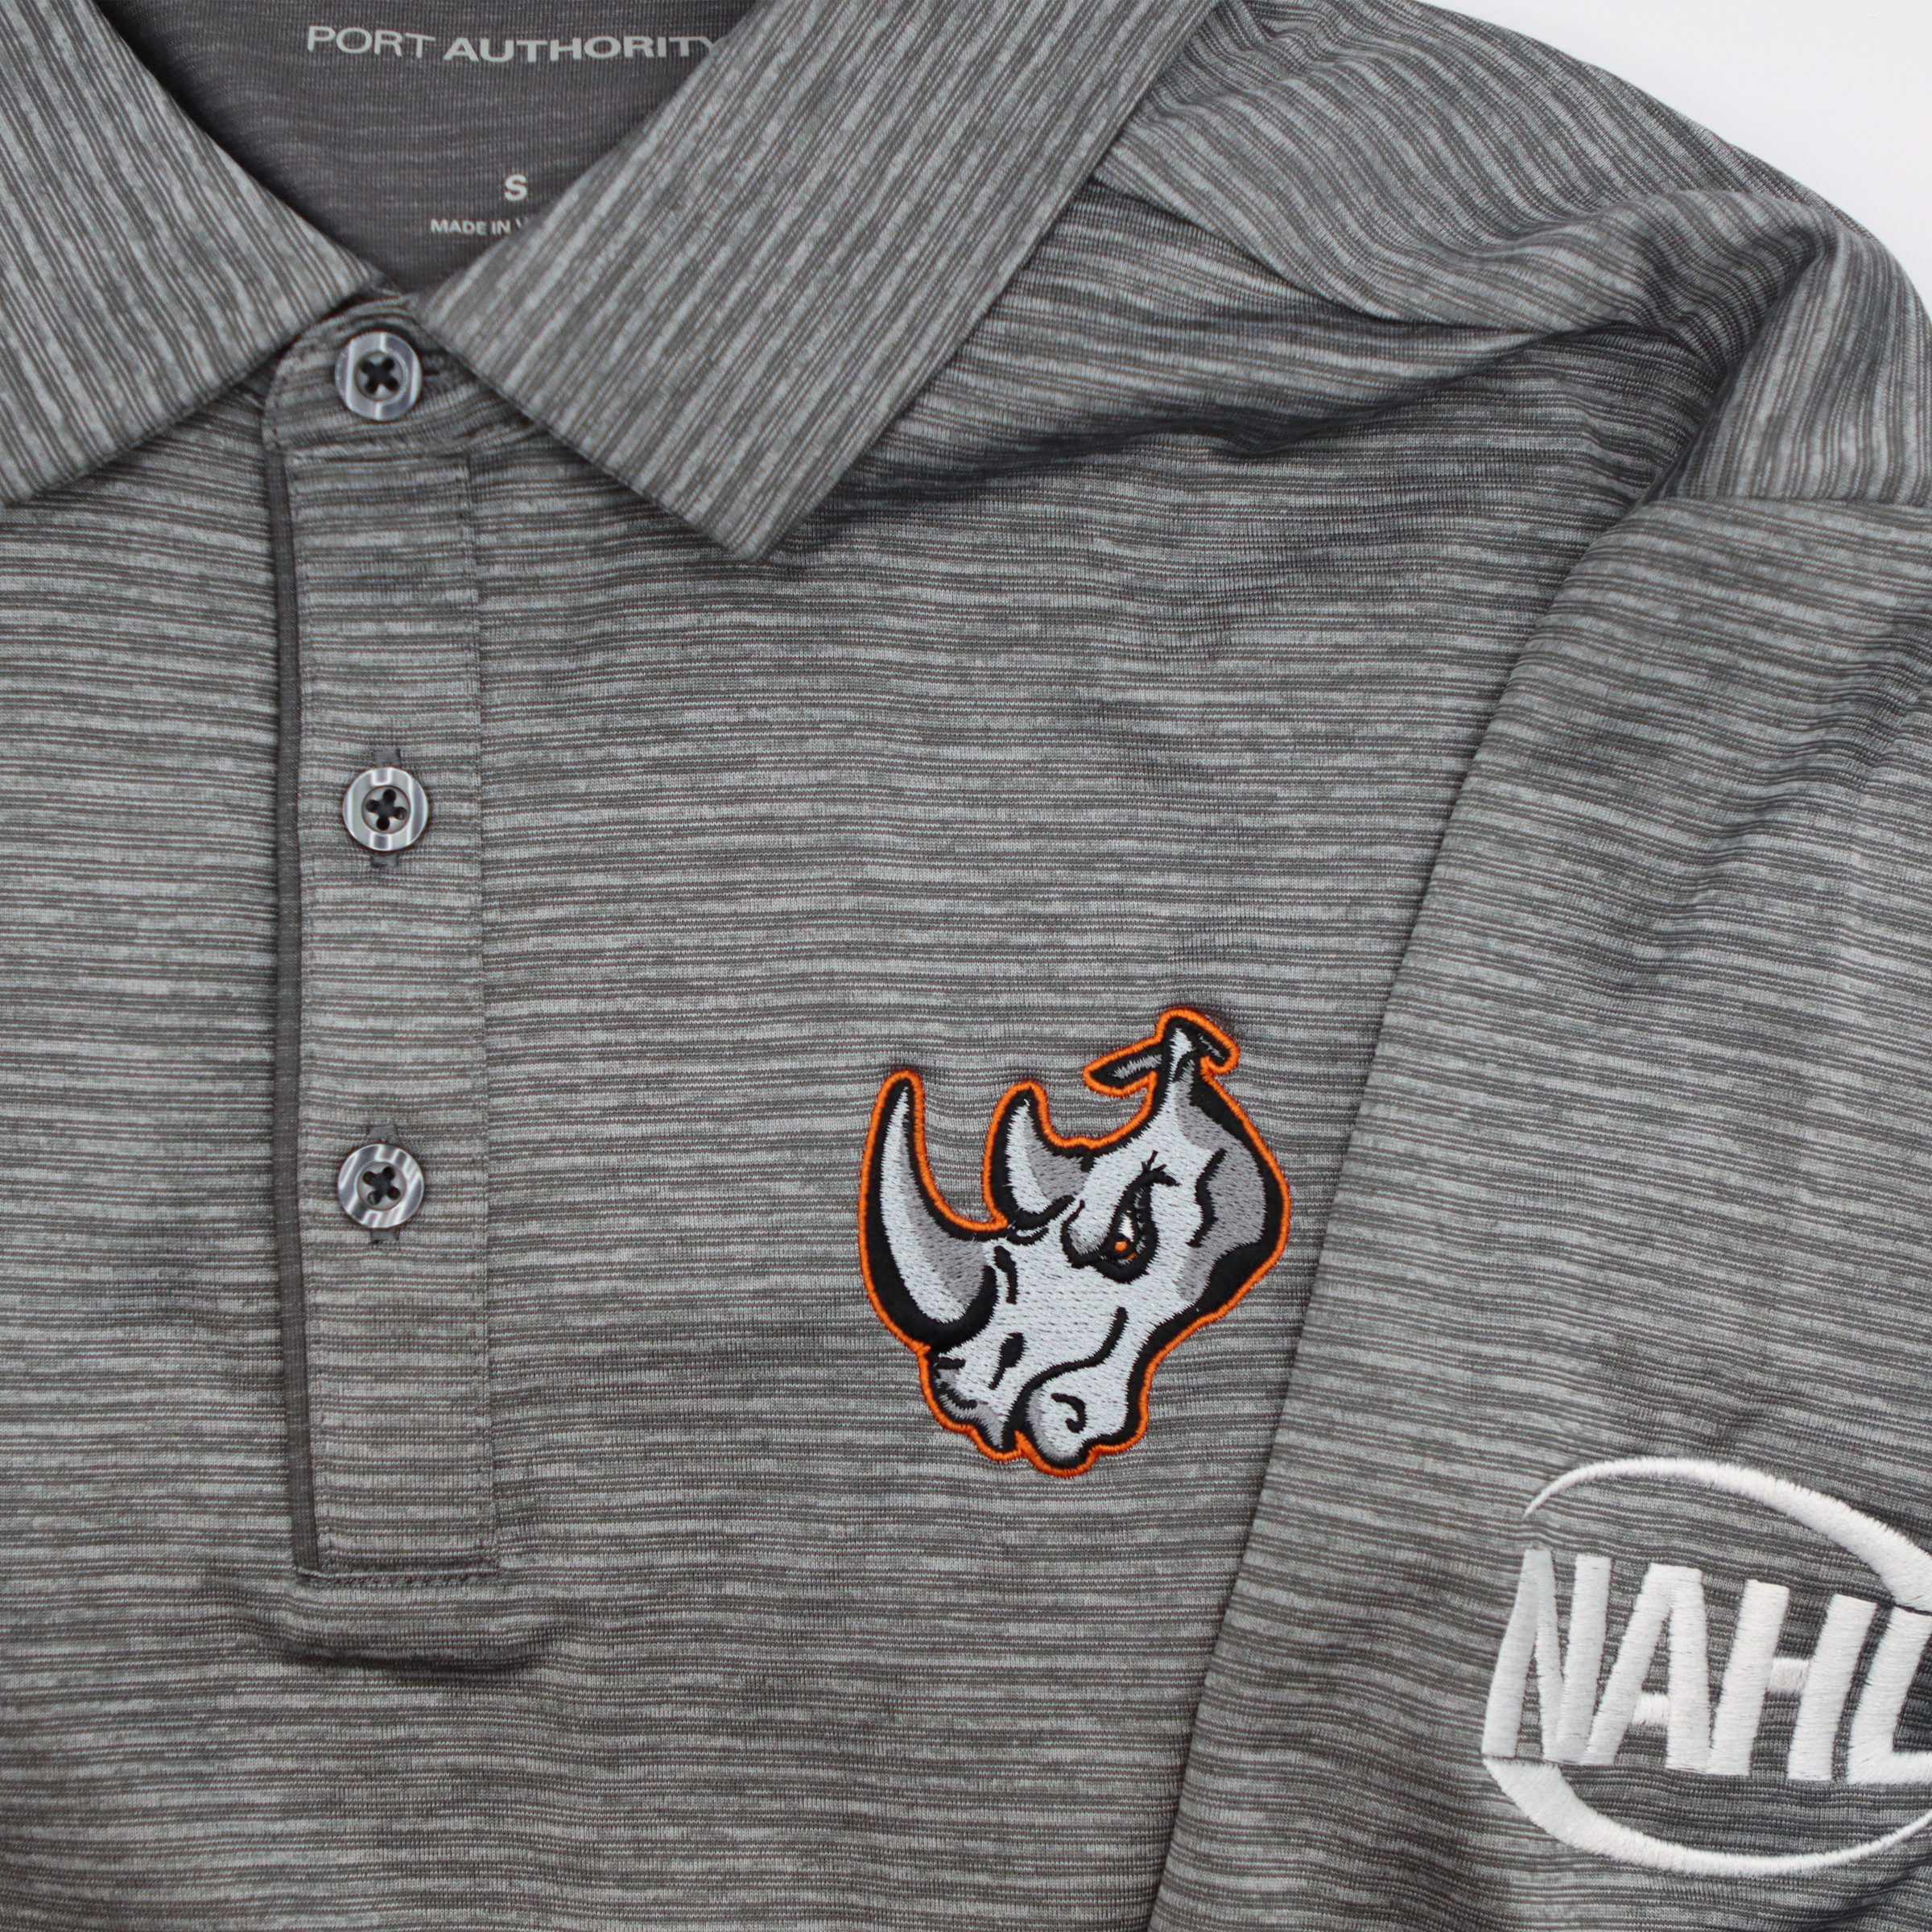 Our upcoming jersey flash sale is - El Paso Rhinos Hockey